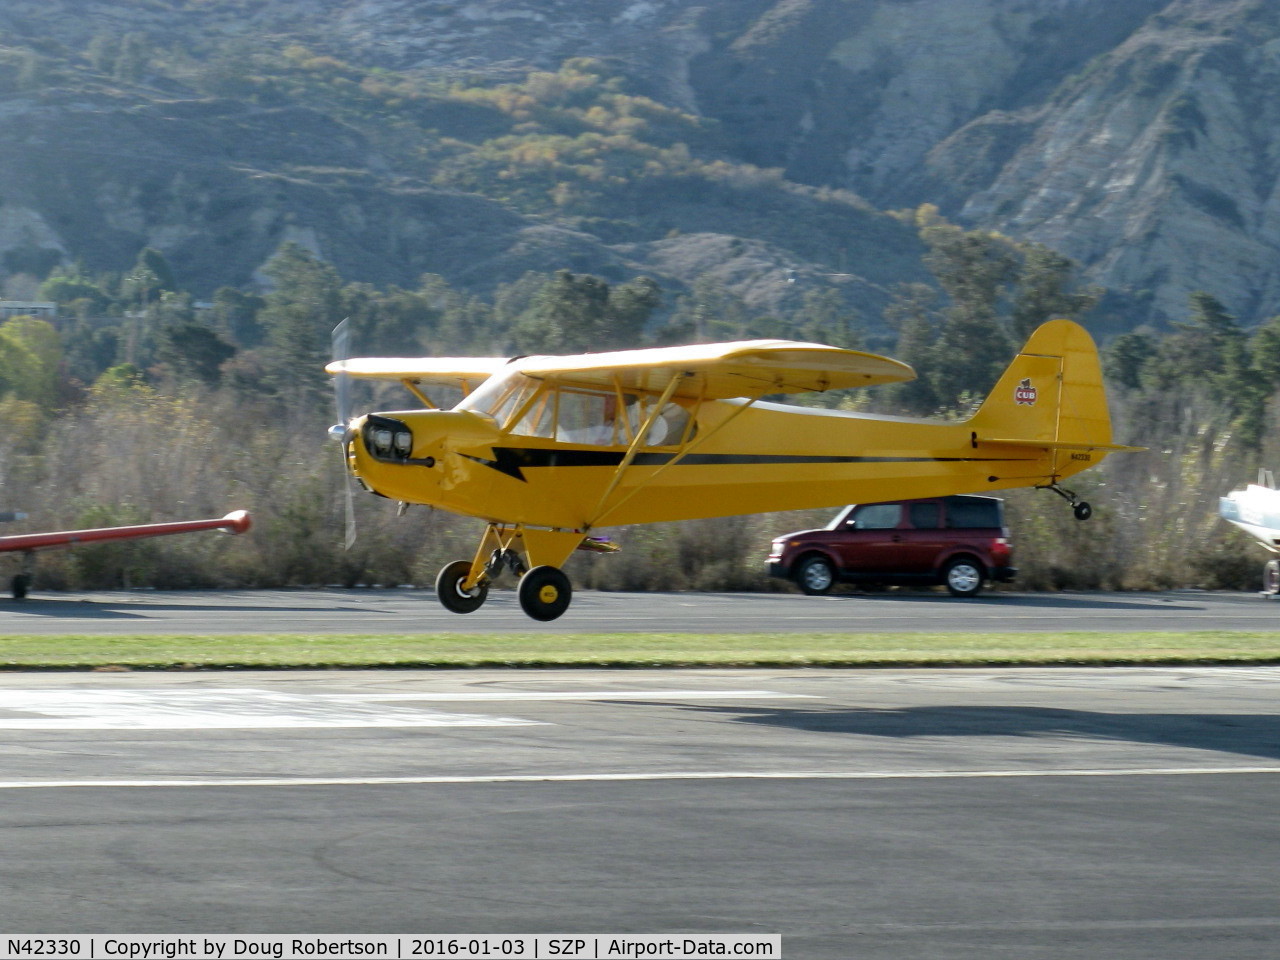 N42330, 1941 Piper J3C-65 Cub Cub C/N 14580, 1941 Piper J3C-65 CUB, Continental A&C65 65 Hp, landing Rwy 04